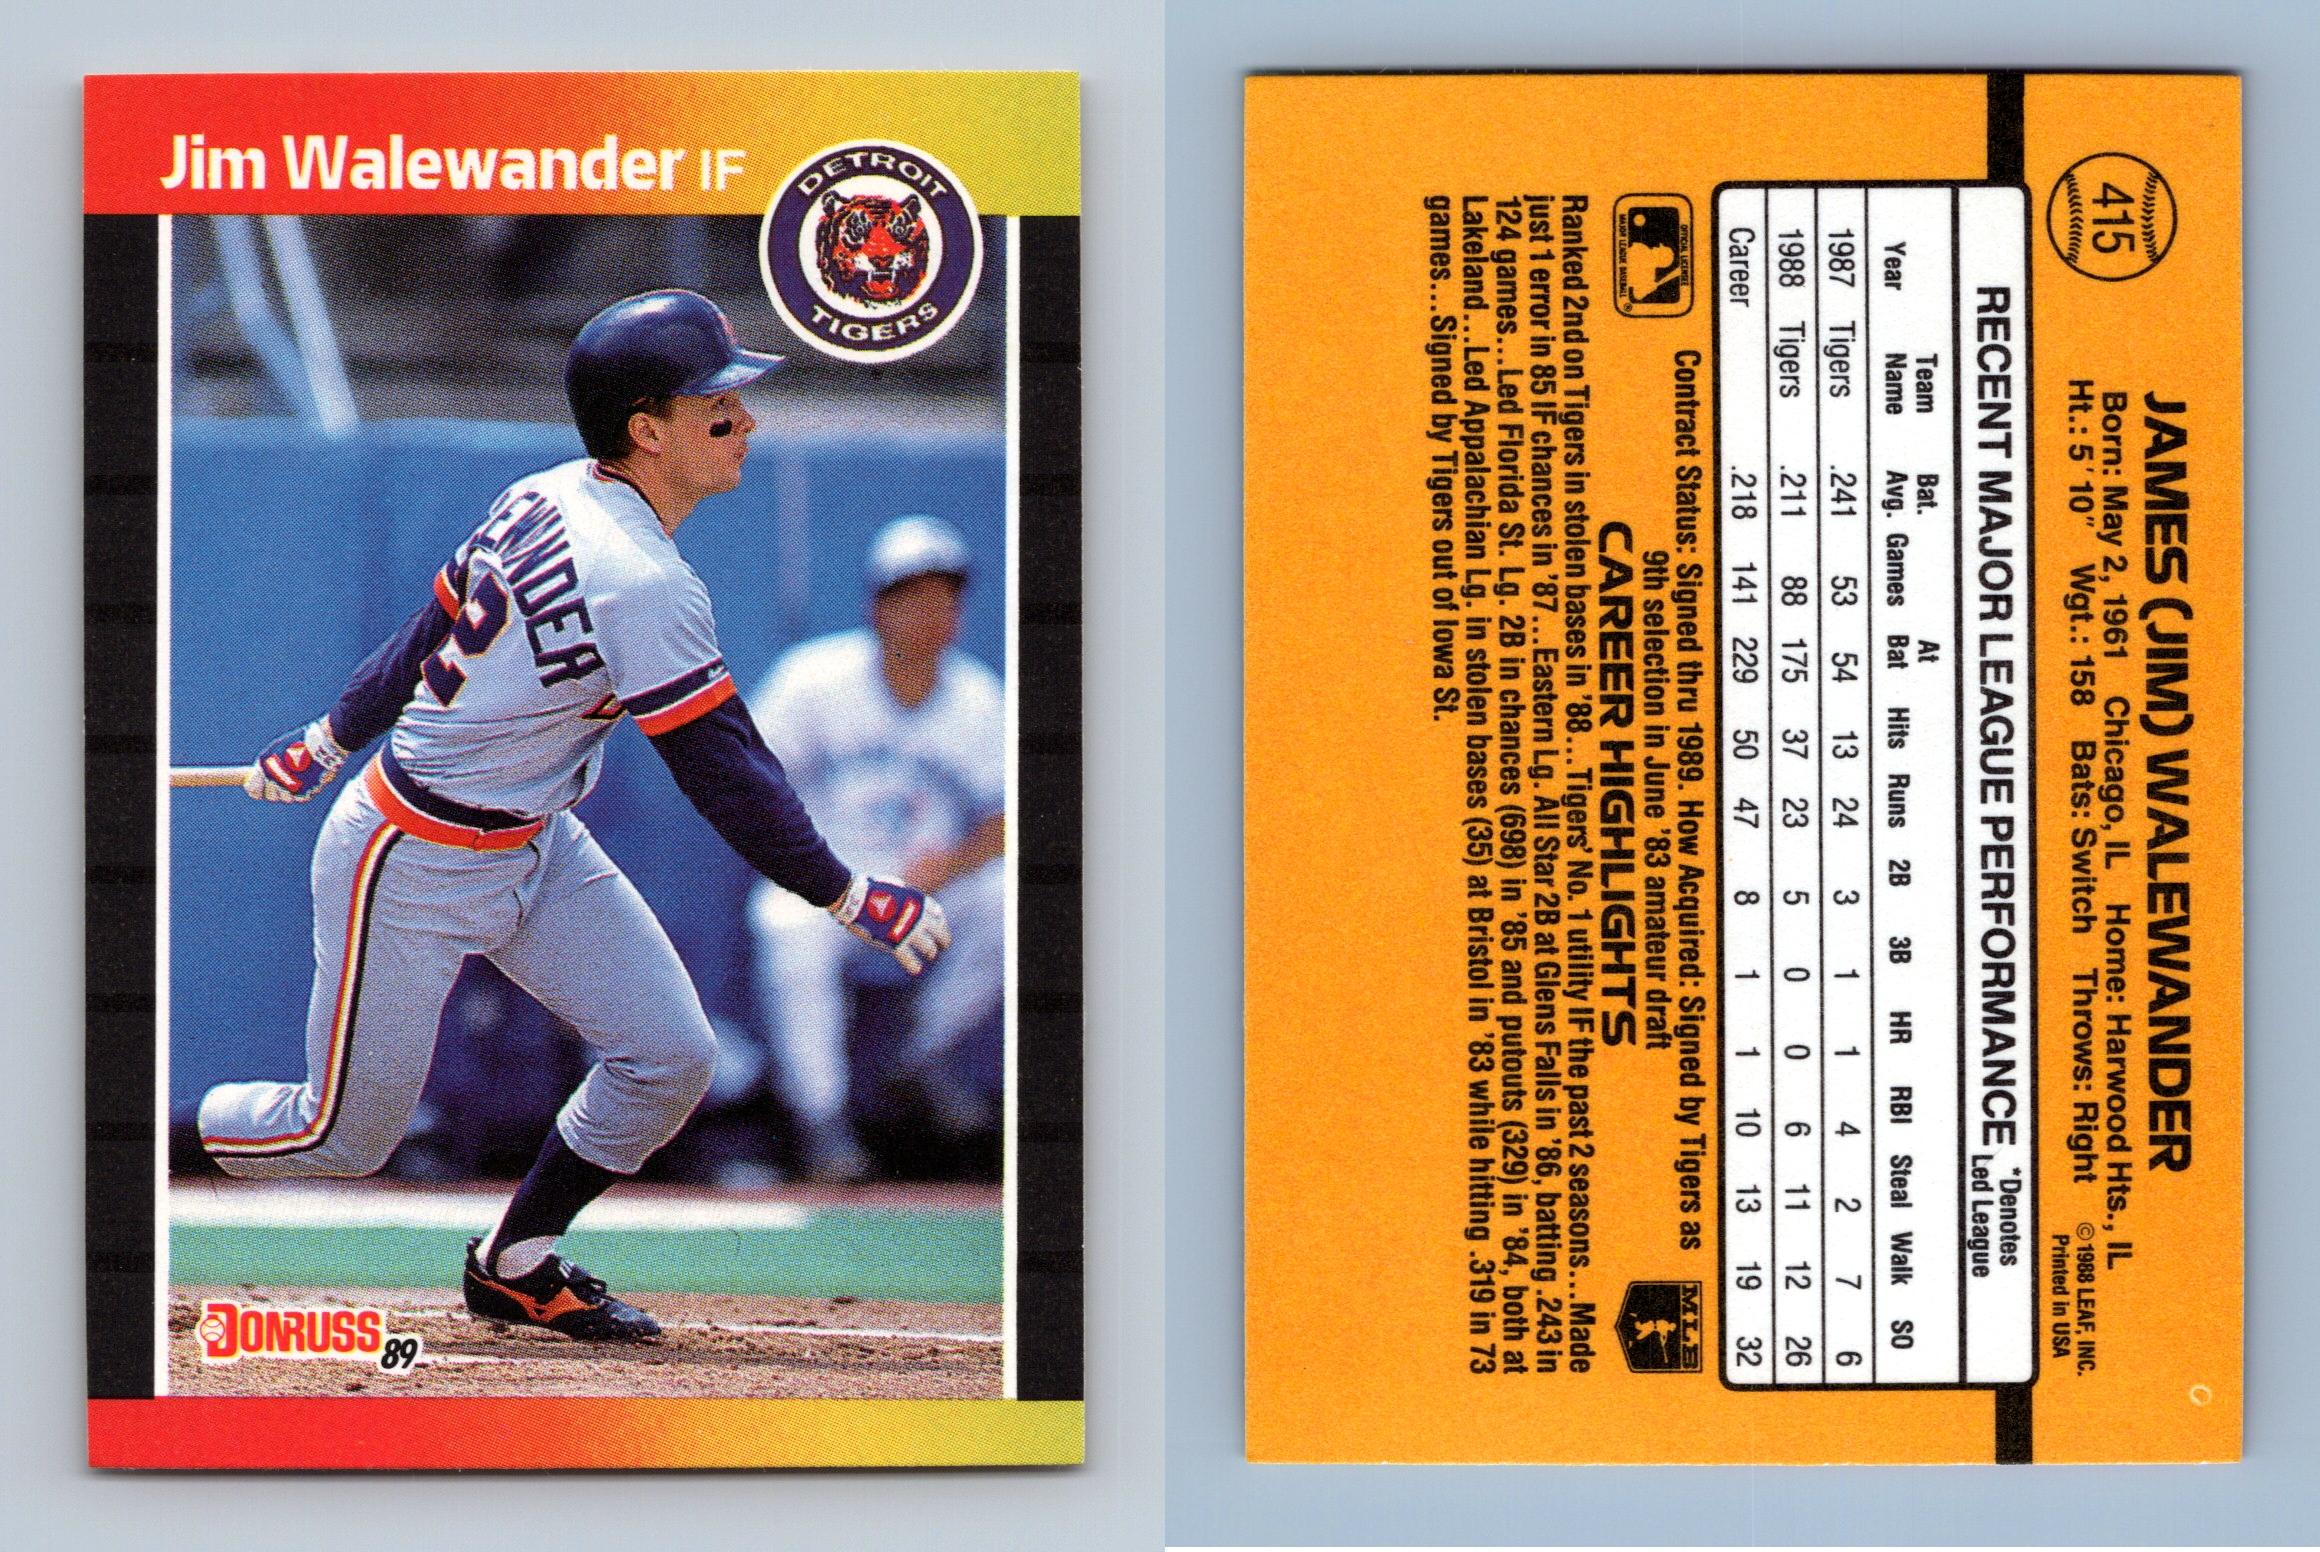 1989 Donruss Baseball Card - #560 Pat Borders - Toronto Blue Jays